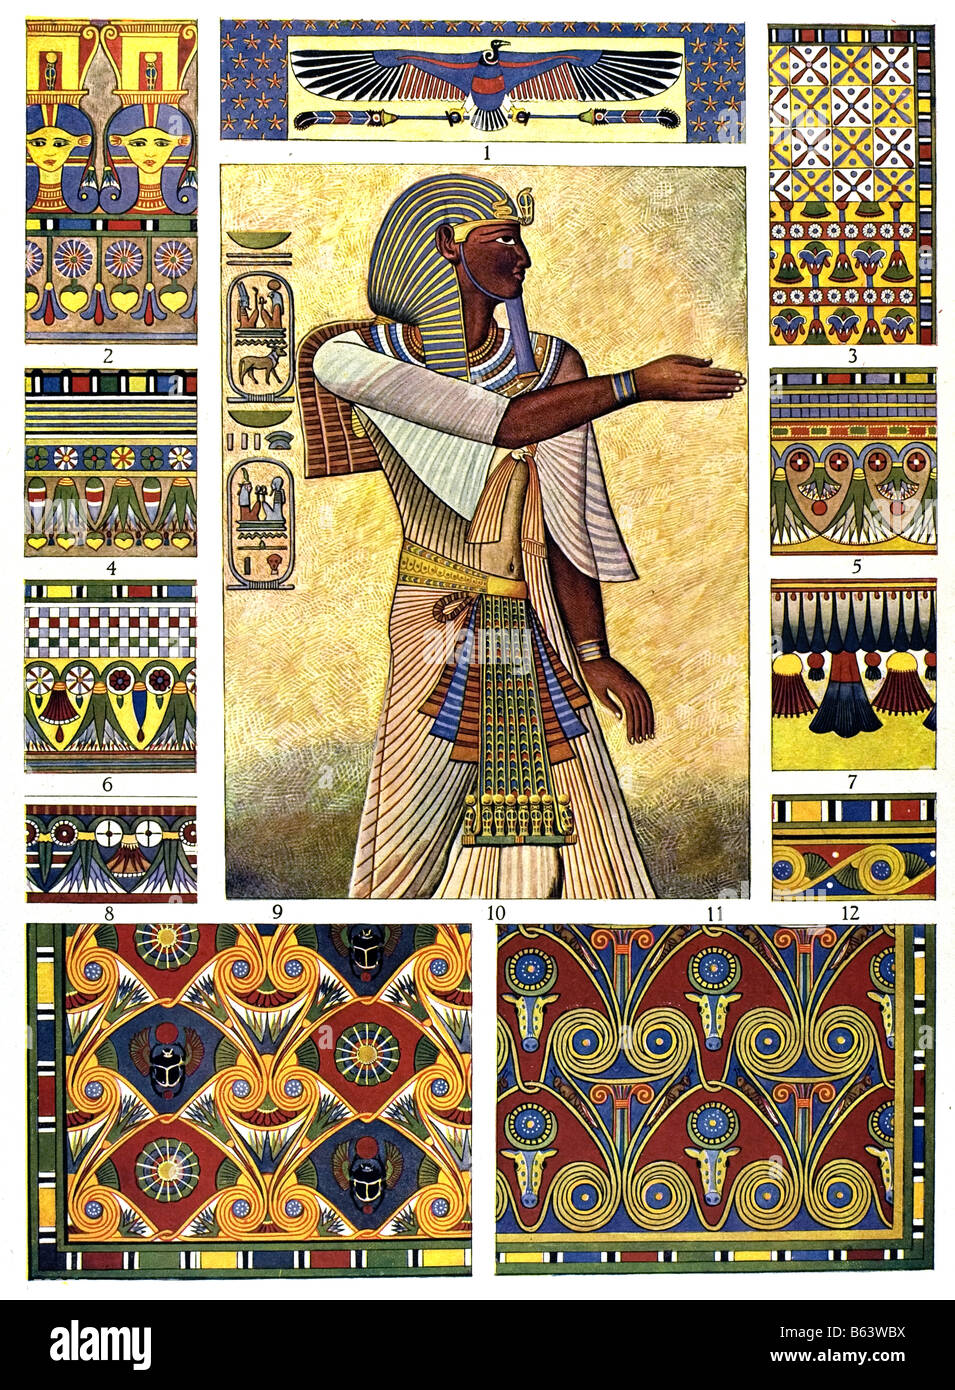 The Egyptian Ornament / Ceiling- and Wallpaintings (Prisse d'Avennes, Histoire de l'ar t Egyptien.) Stock Photo